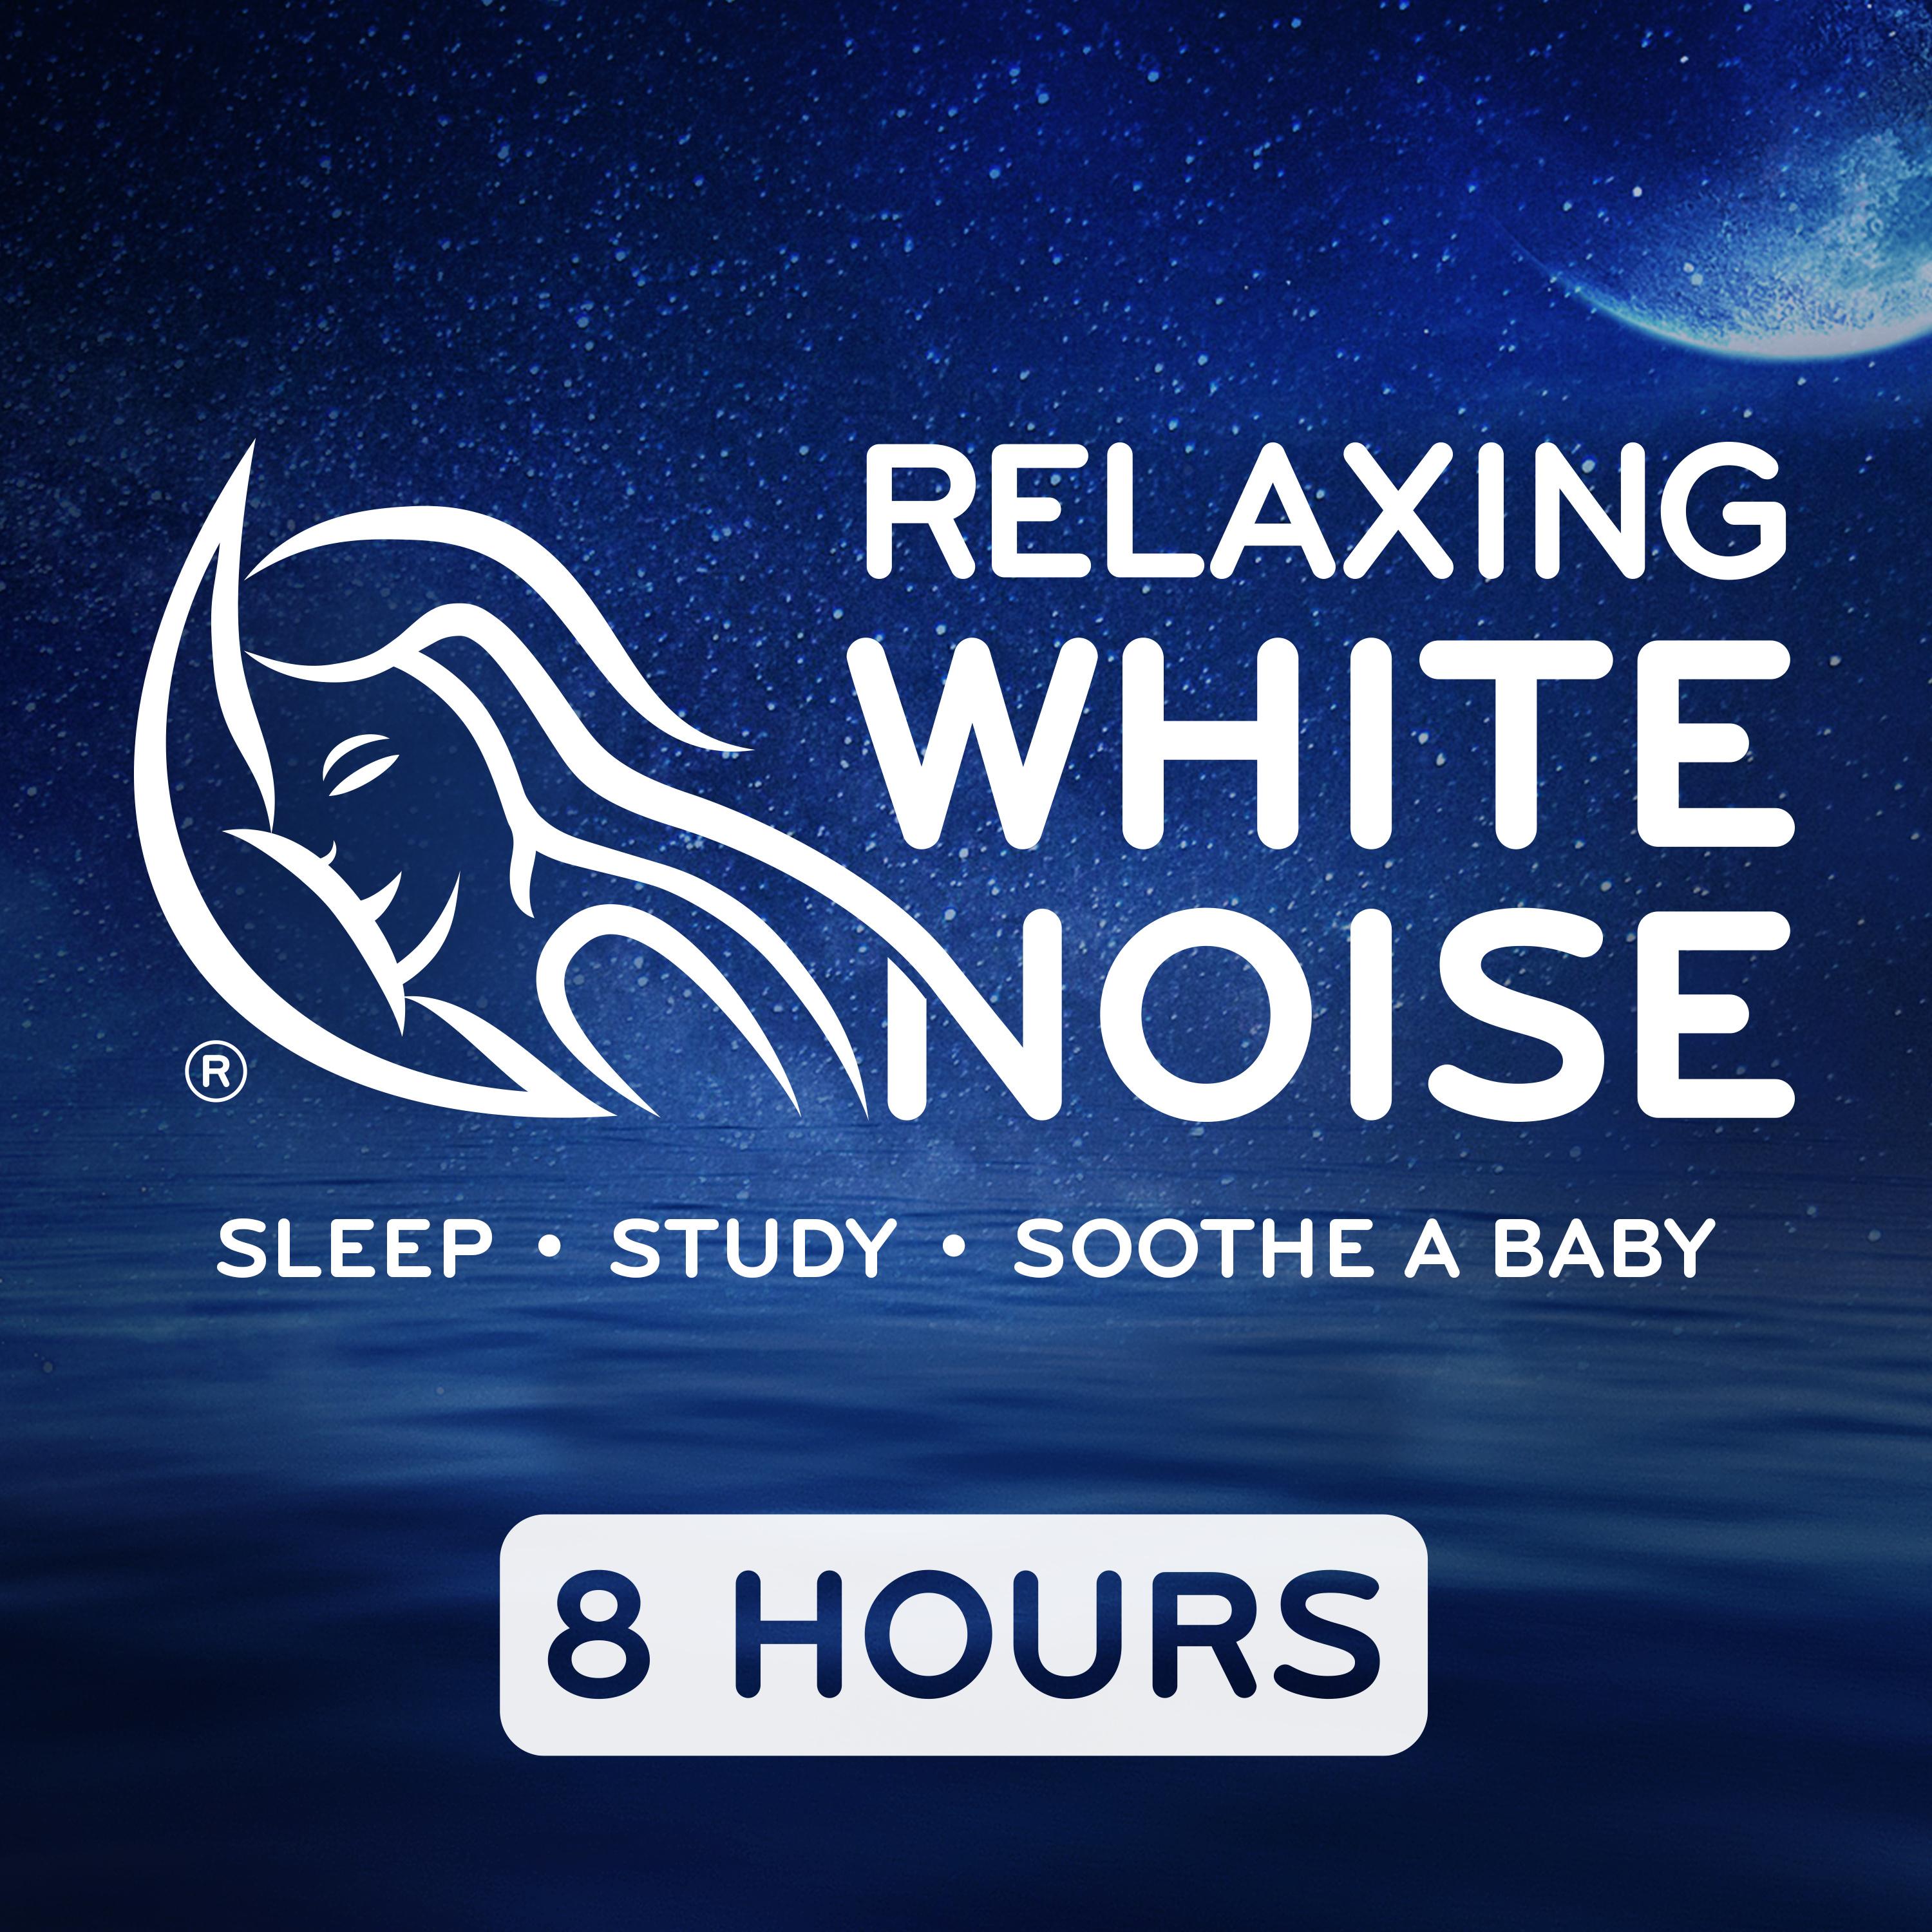 Lunar White Noise Sleep Sound 8 Hours